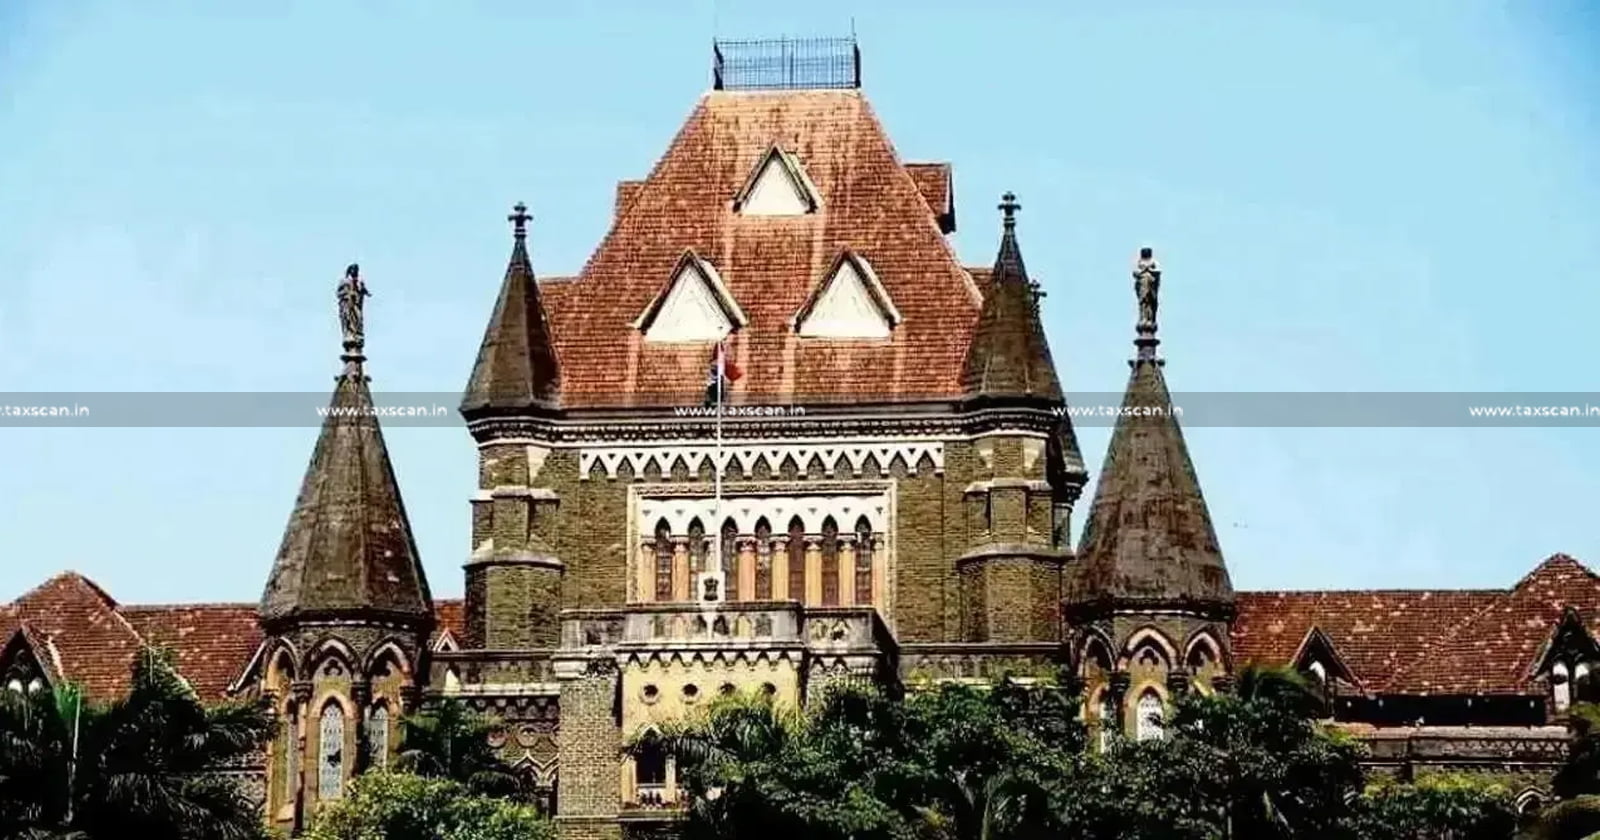 SVLDRS-1 - SVLDRS-2 - Bombay High Court - Rejection Letter - taxscan